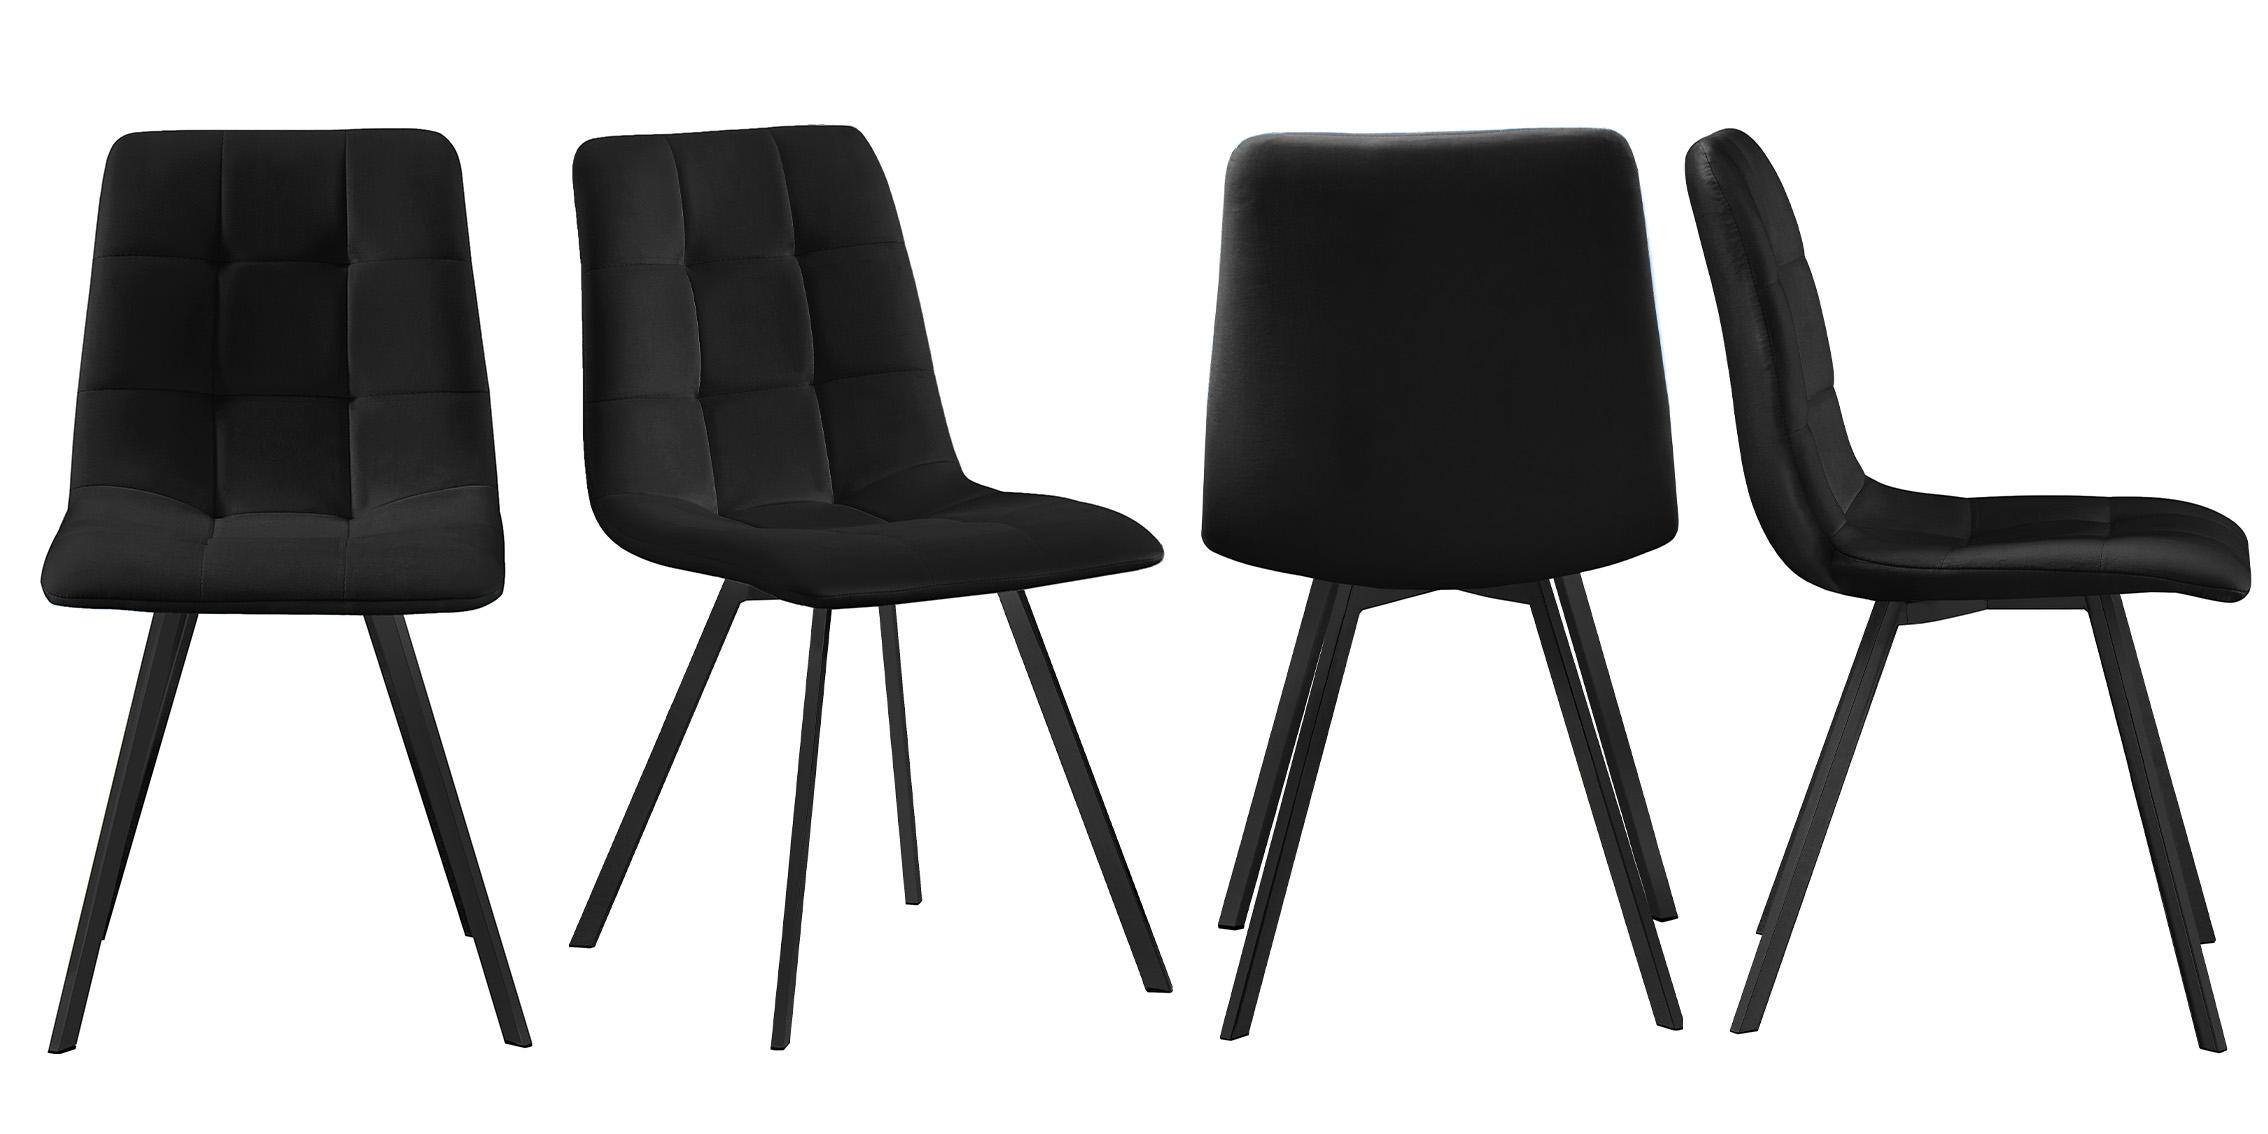 Contemporary, Modern Dining Chair Set ANNIE 981Black-C 981Black-C-Set-4 in Black Fabric